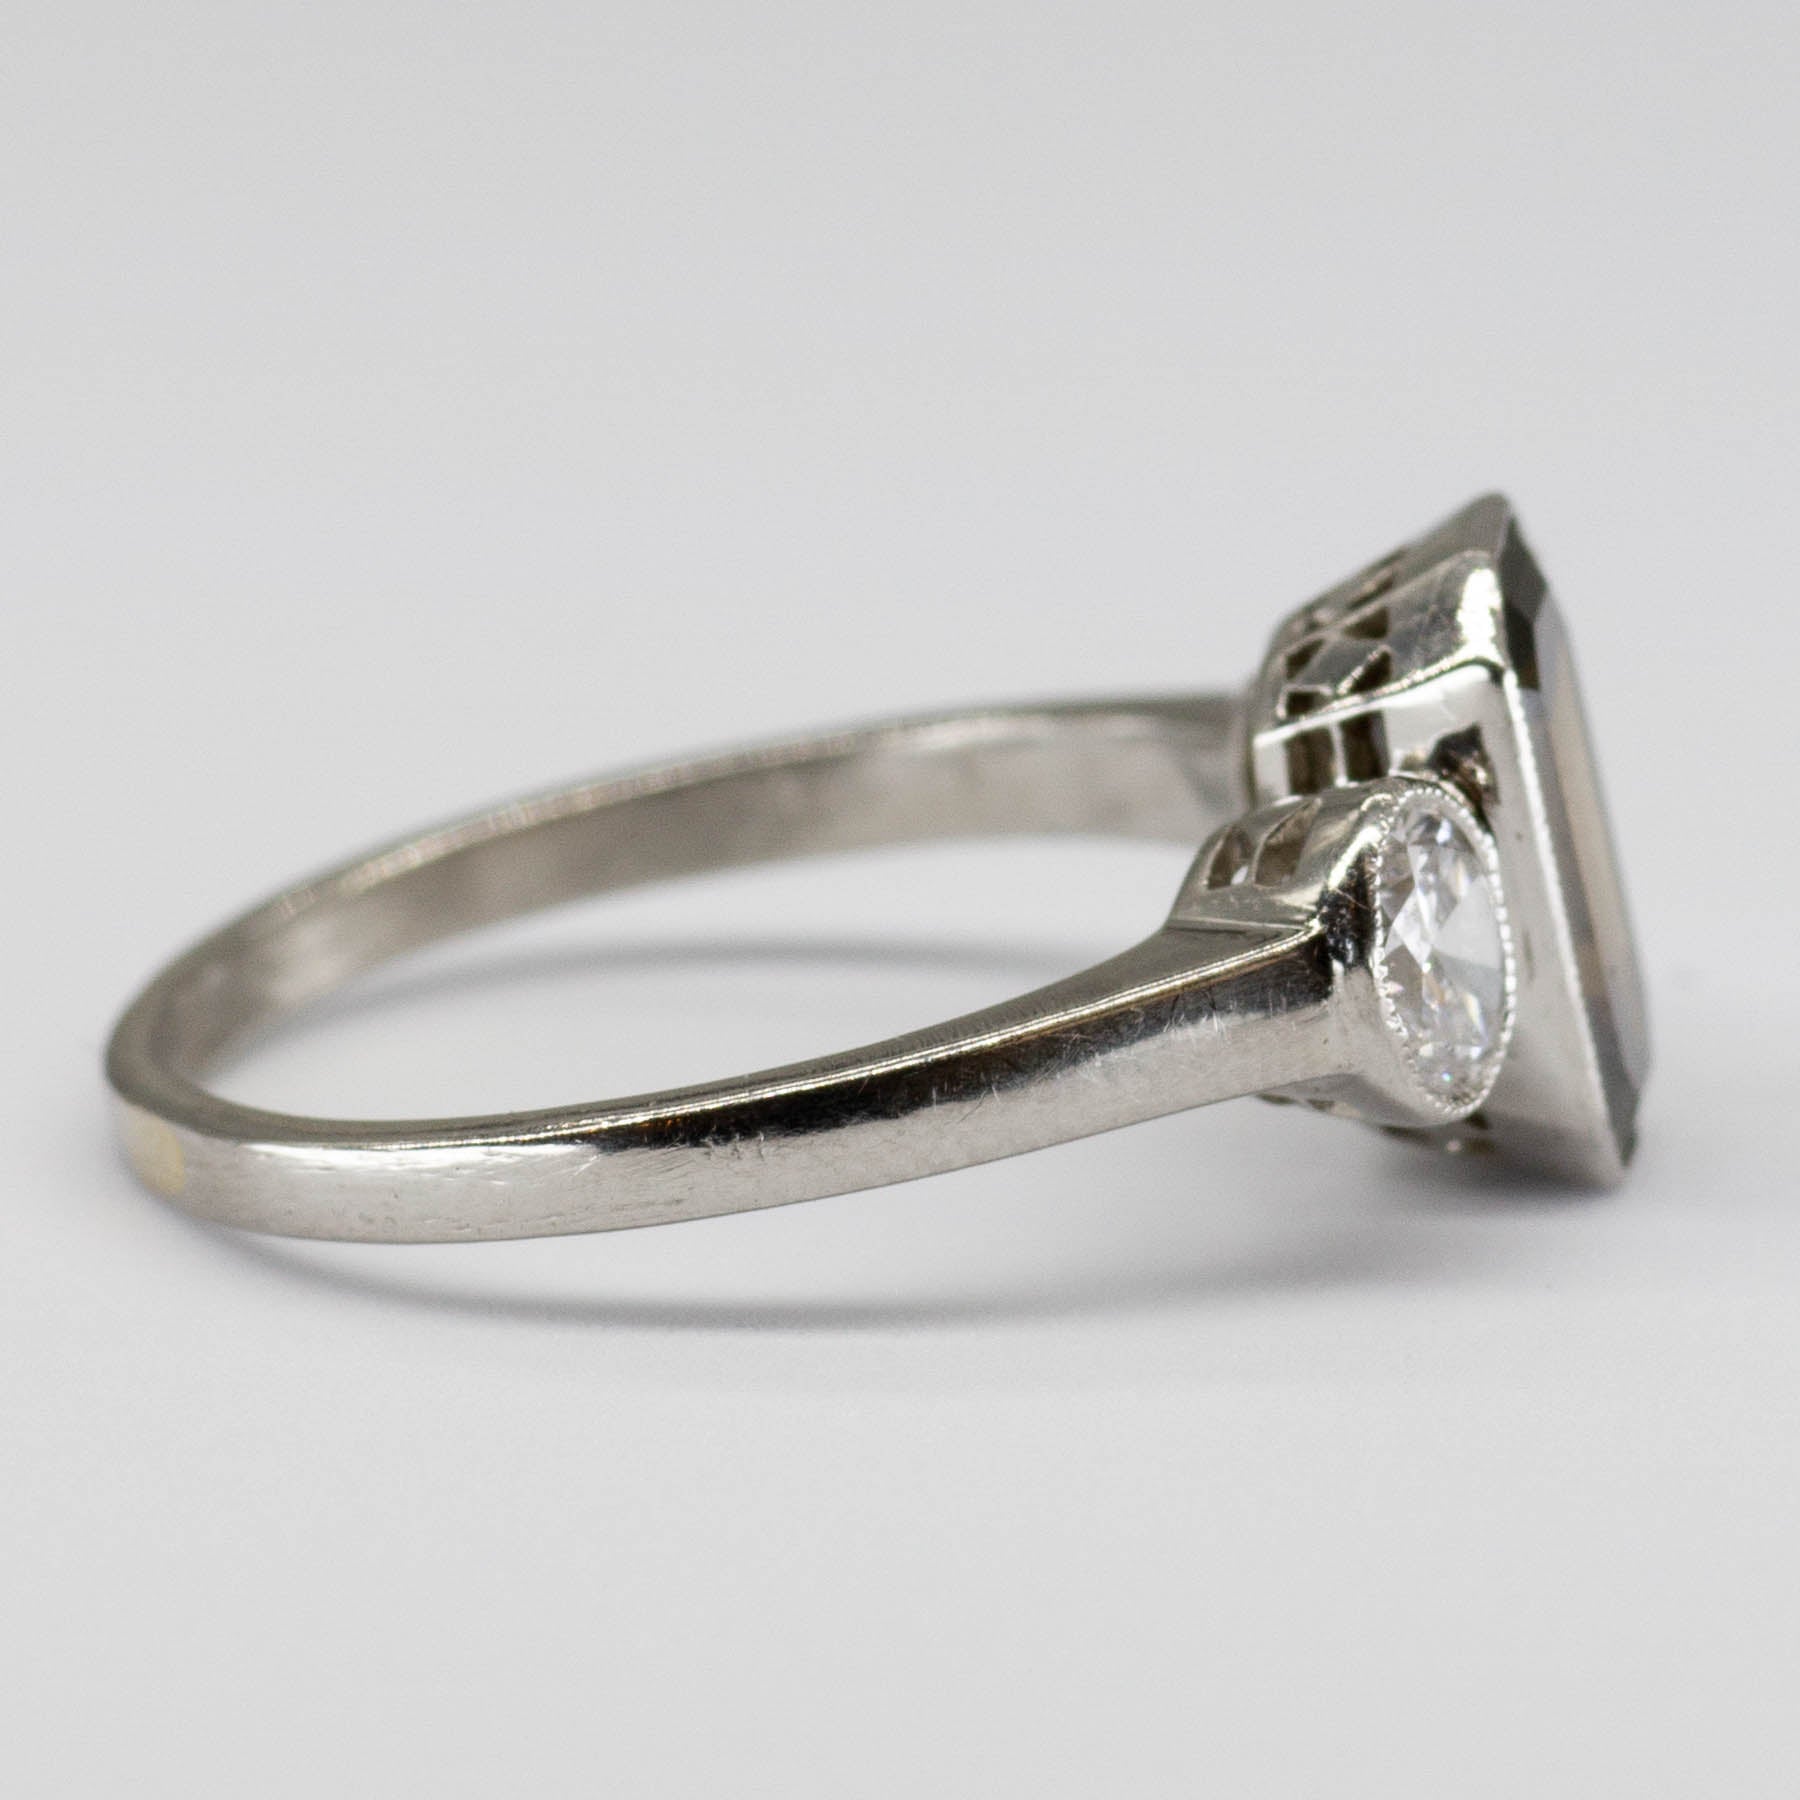 Art Deco Emerald Cut Chocolate Diamond Ring with Oval Side Diamonds | SZ 6.25 |